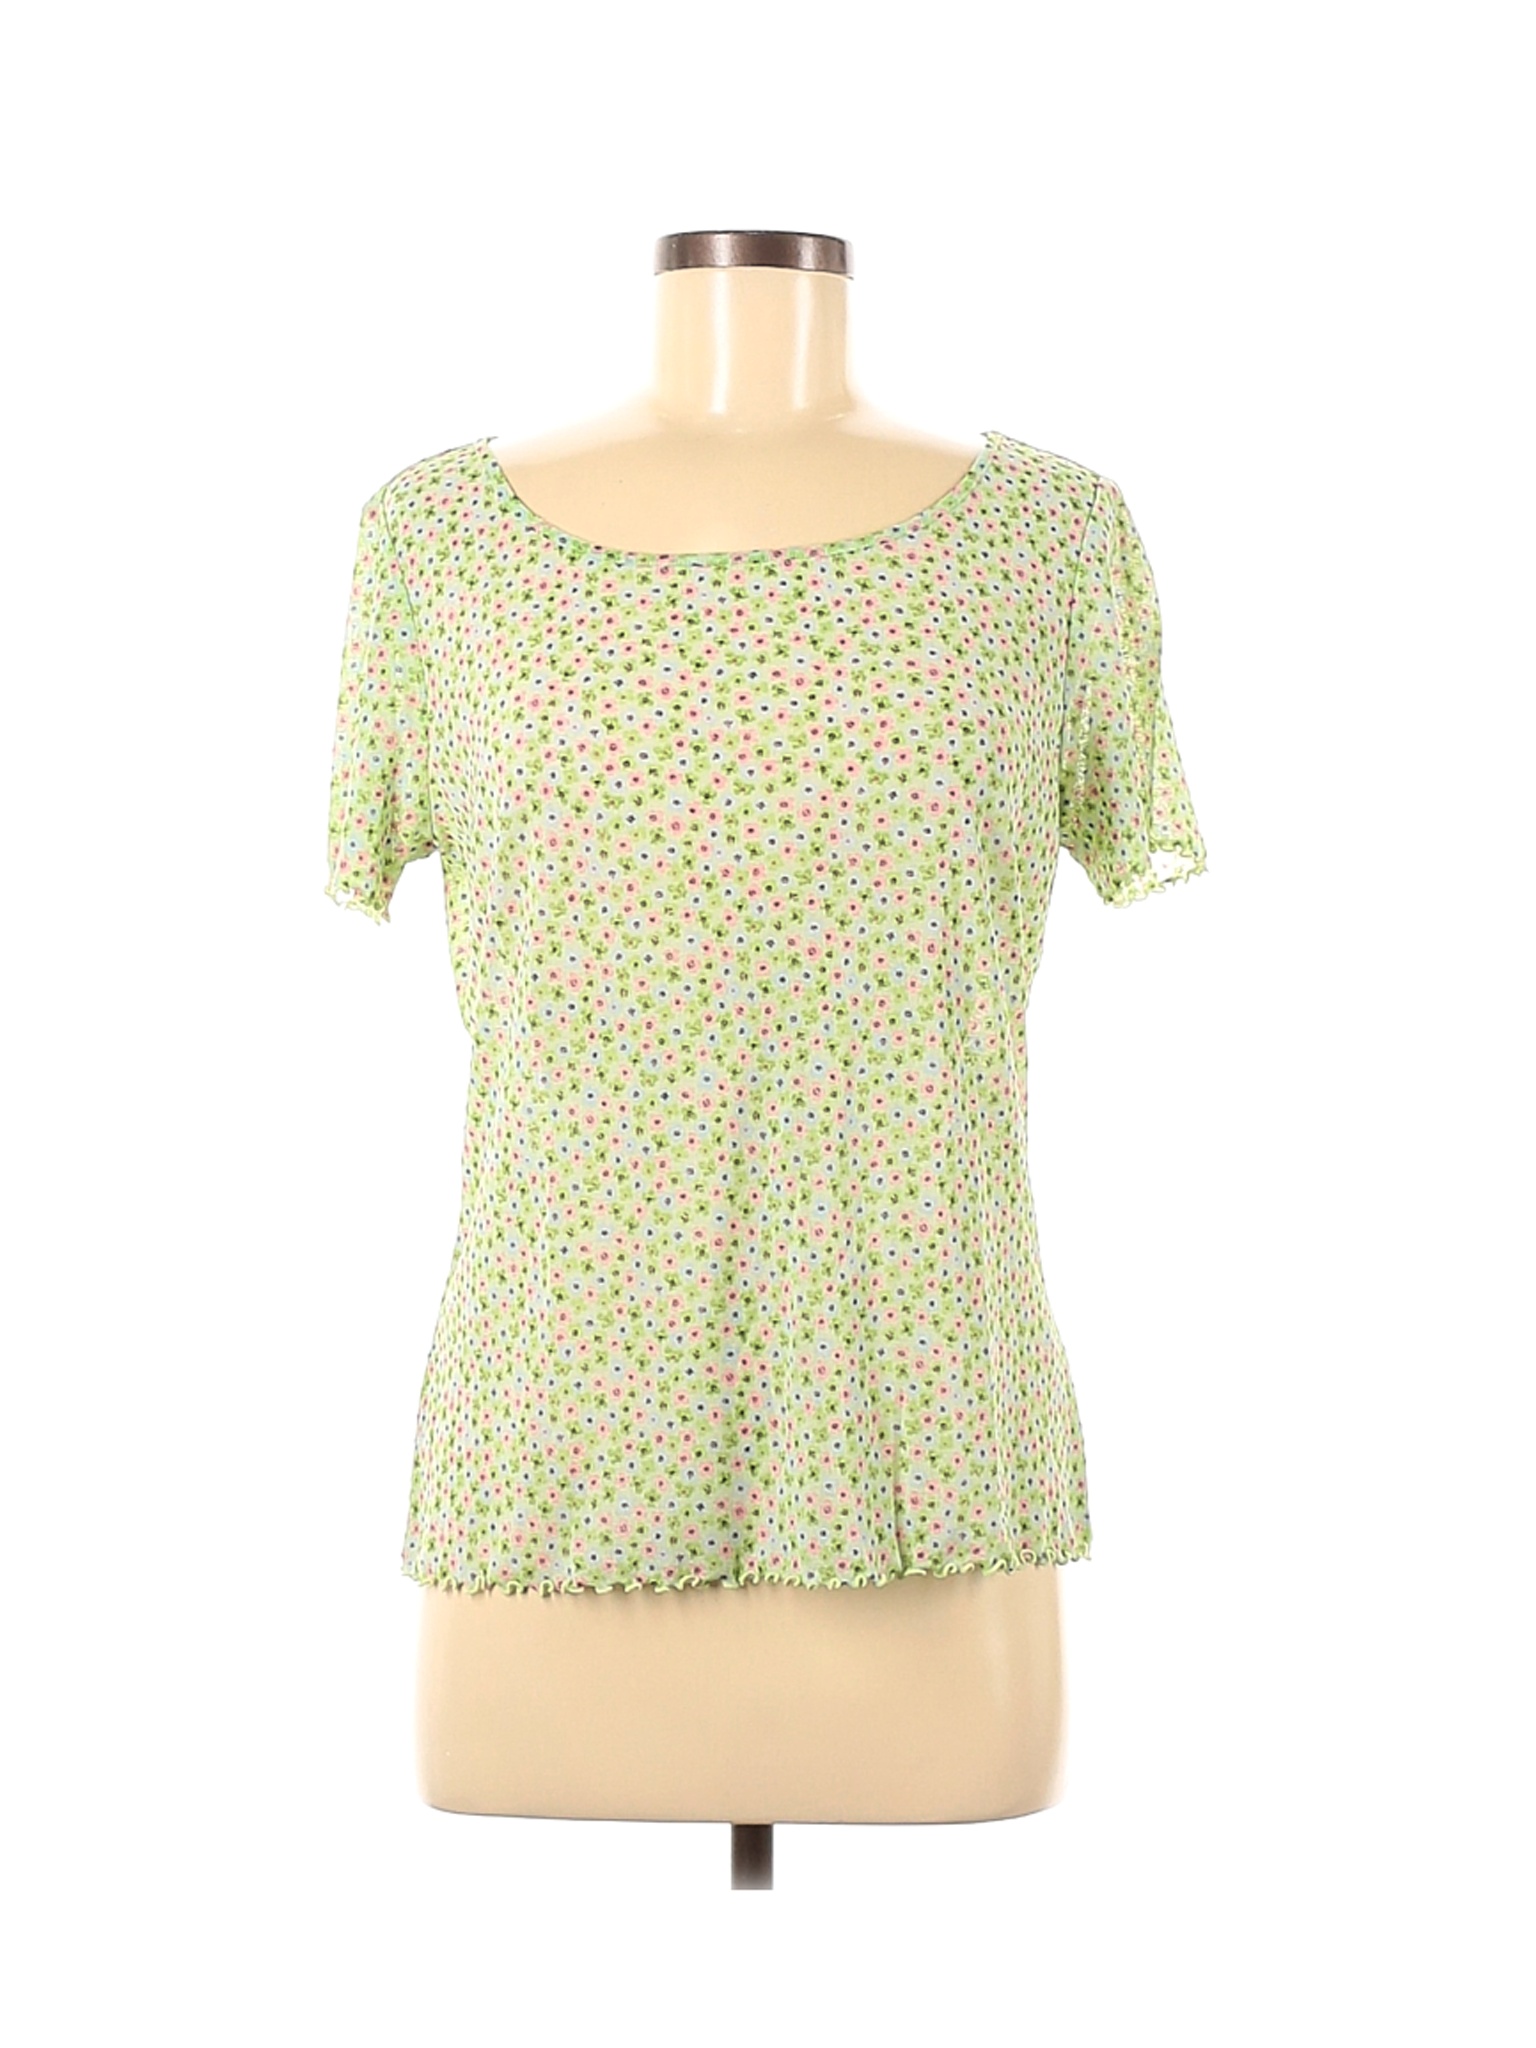 J.Jill Women Green Short Sleeve Top M | eBay